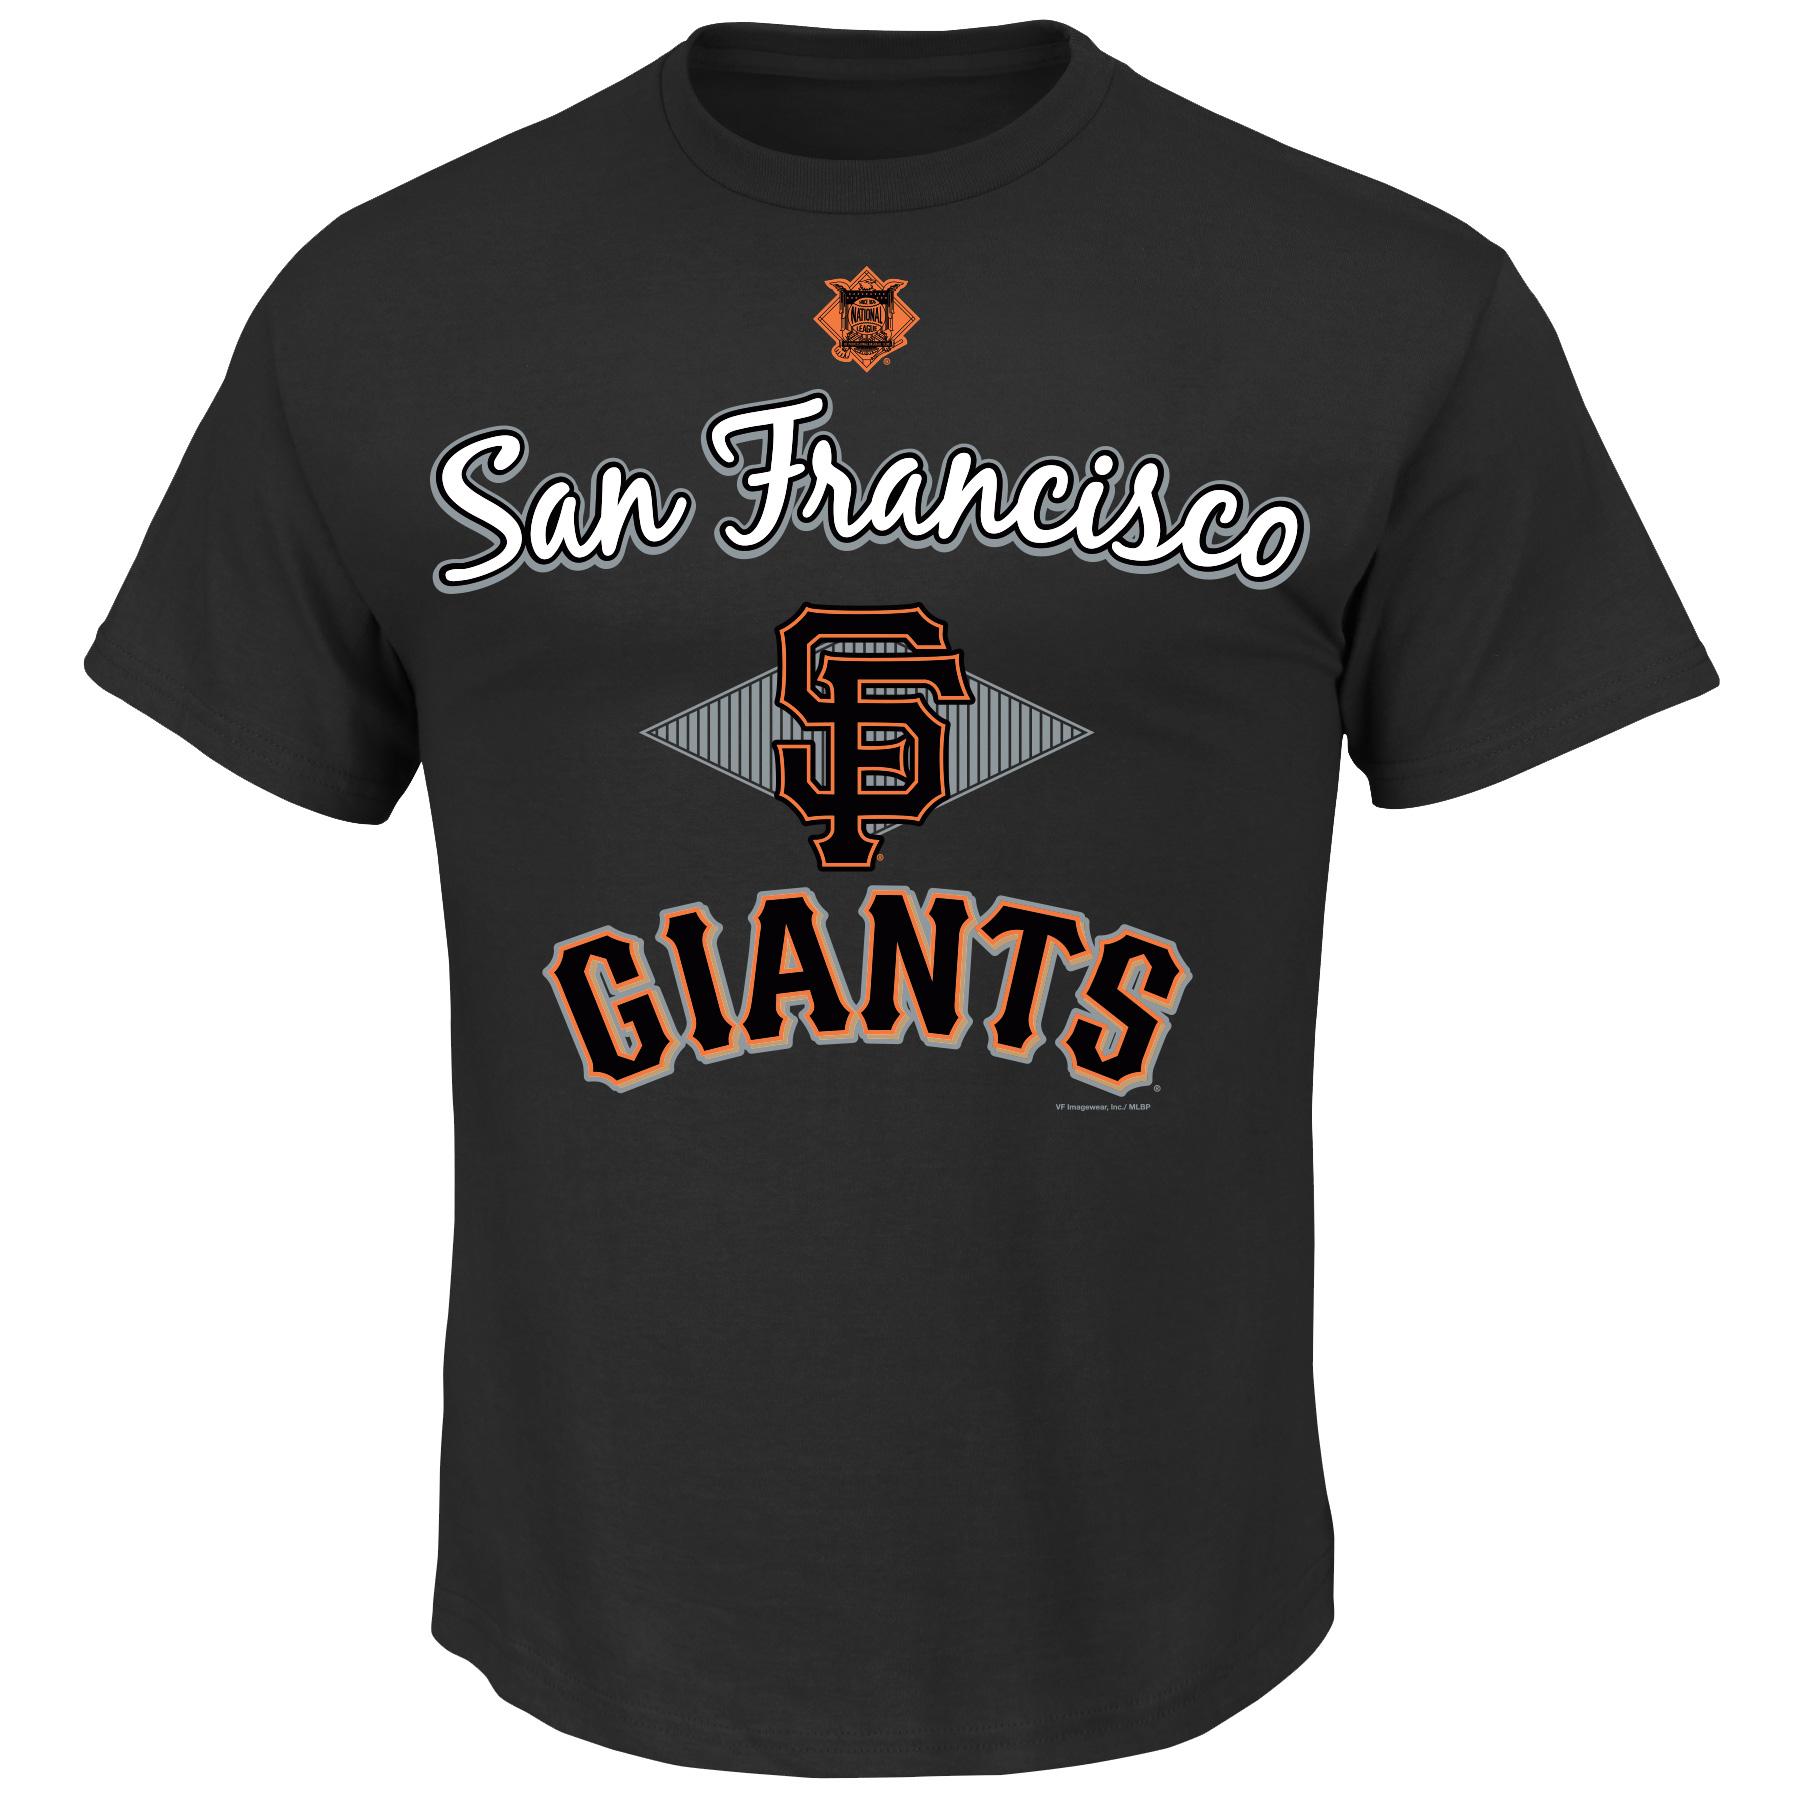 MLB Men's Big & Tall Graphic T-Shirt - San Francisco Giants